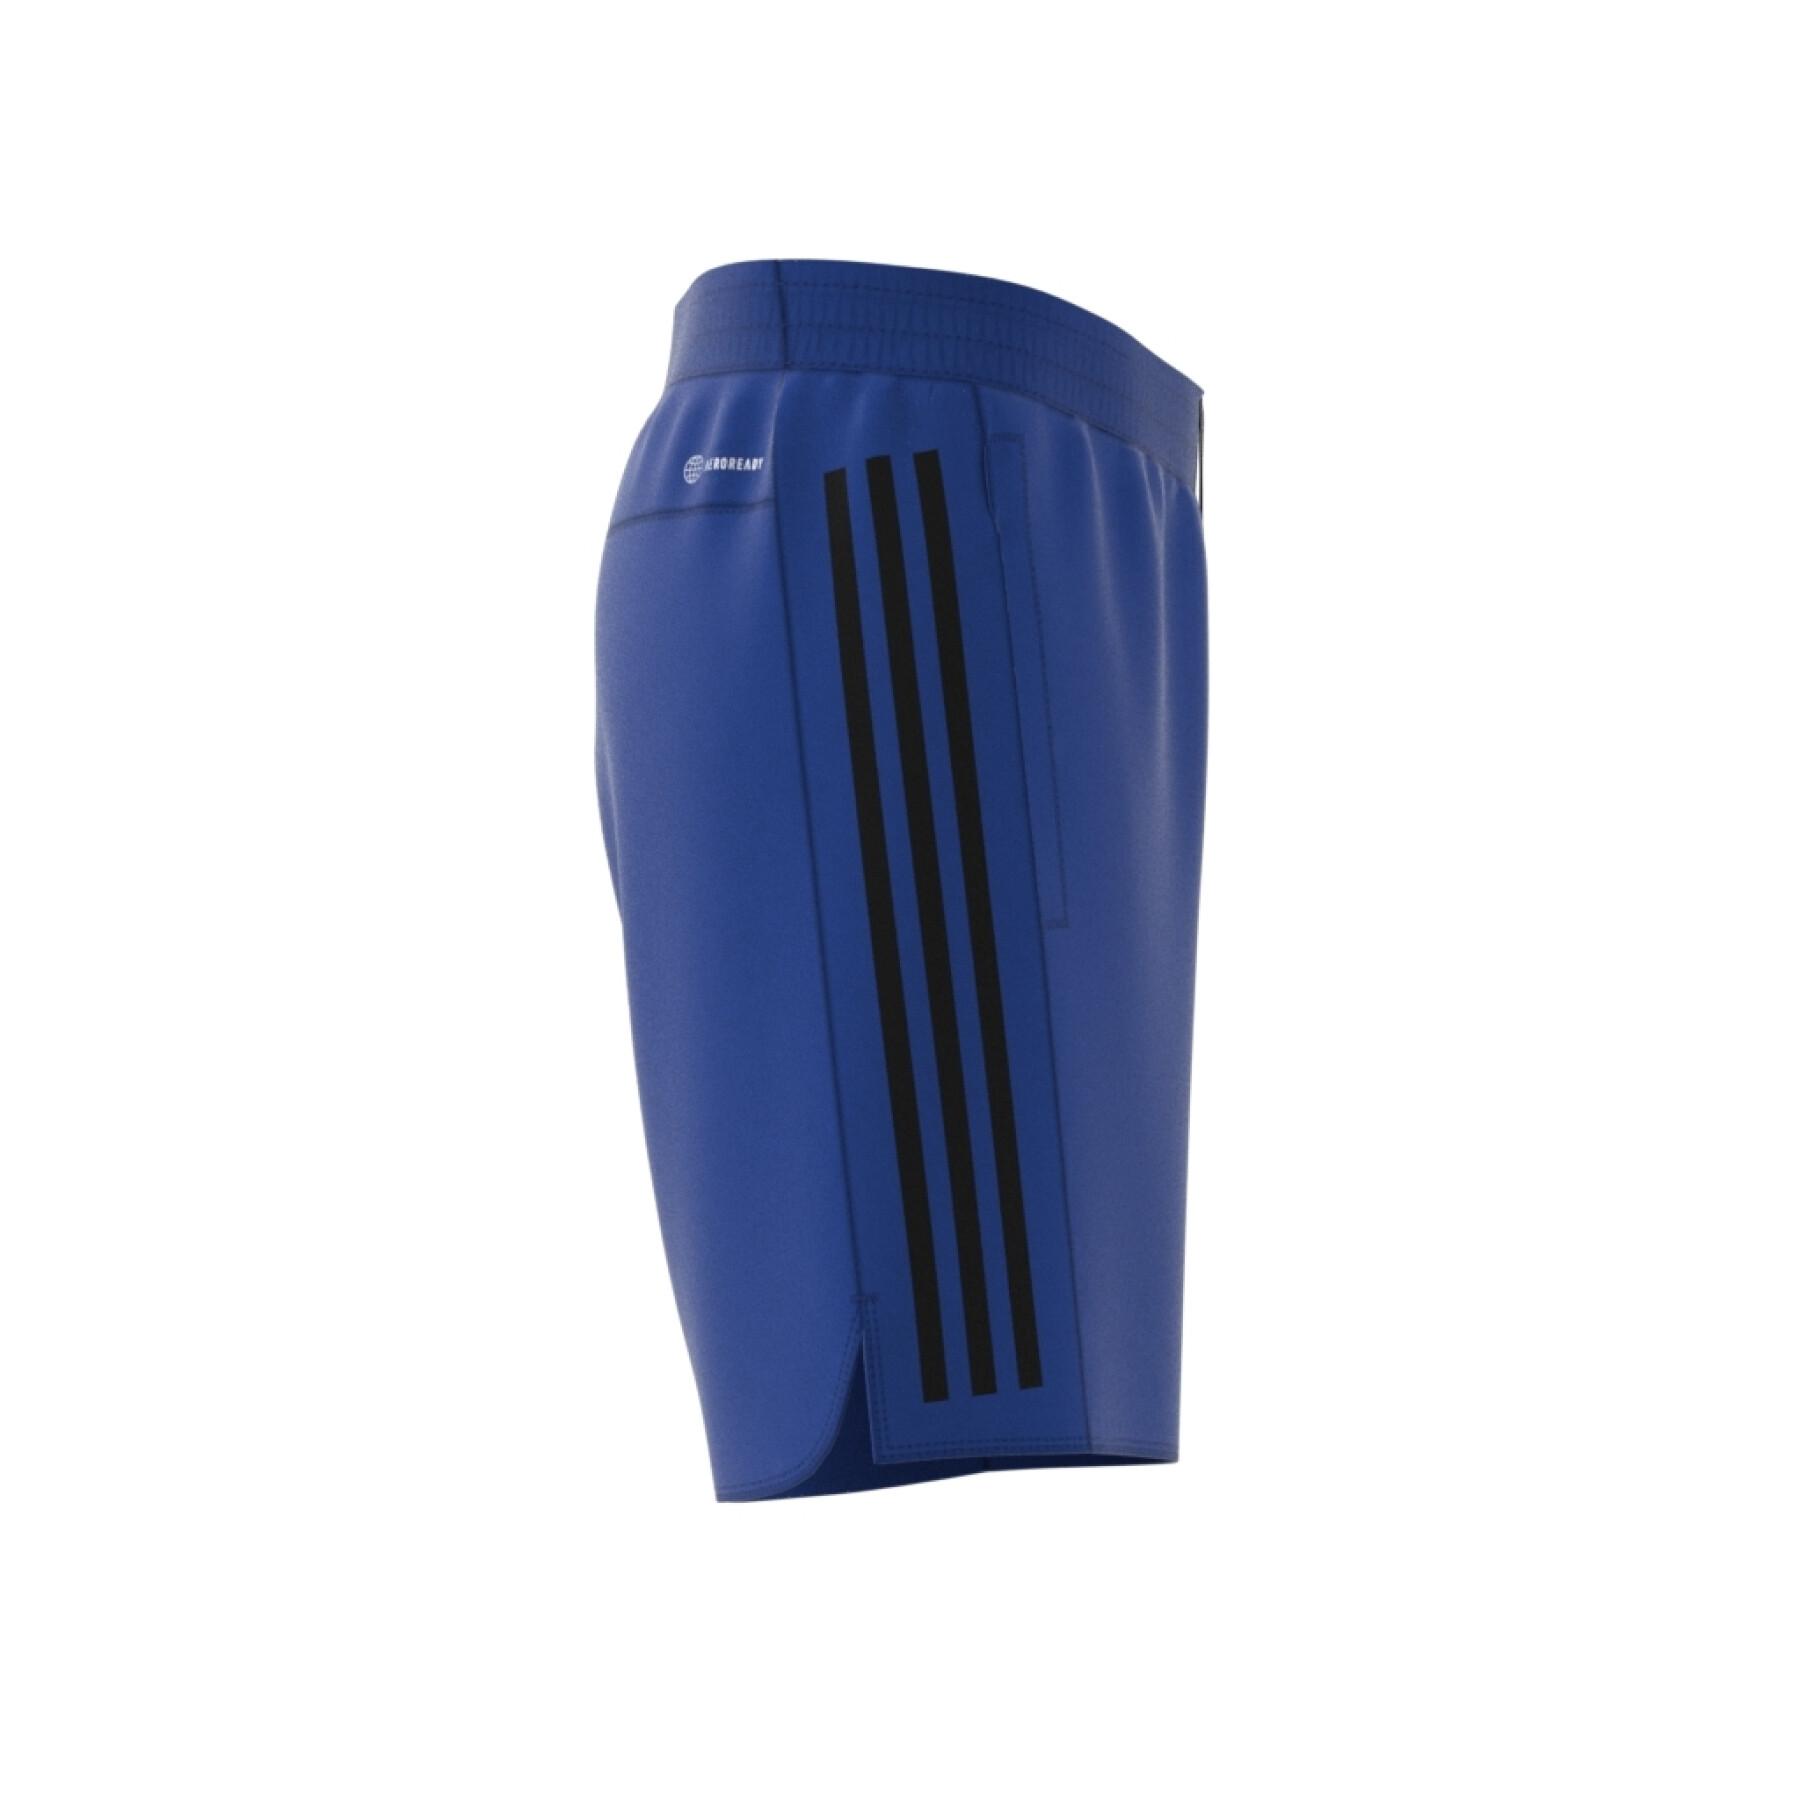 Shorts with 3 fully reflective stripes adidas Run icon